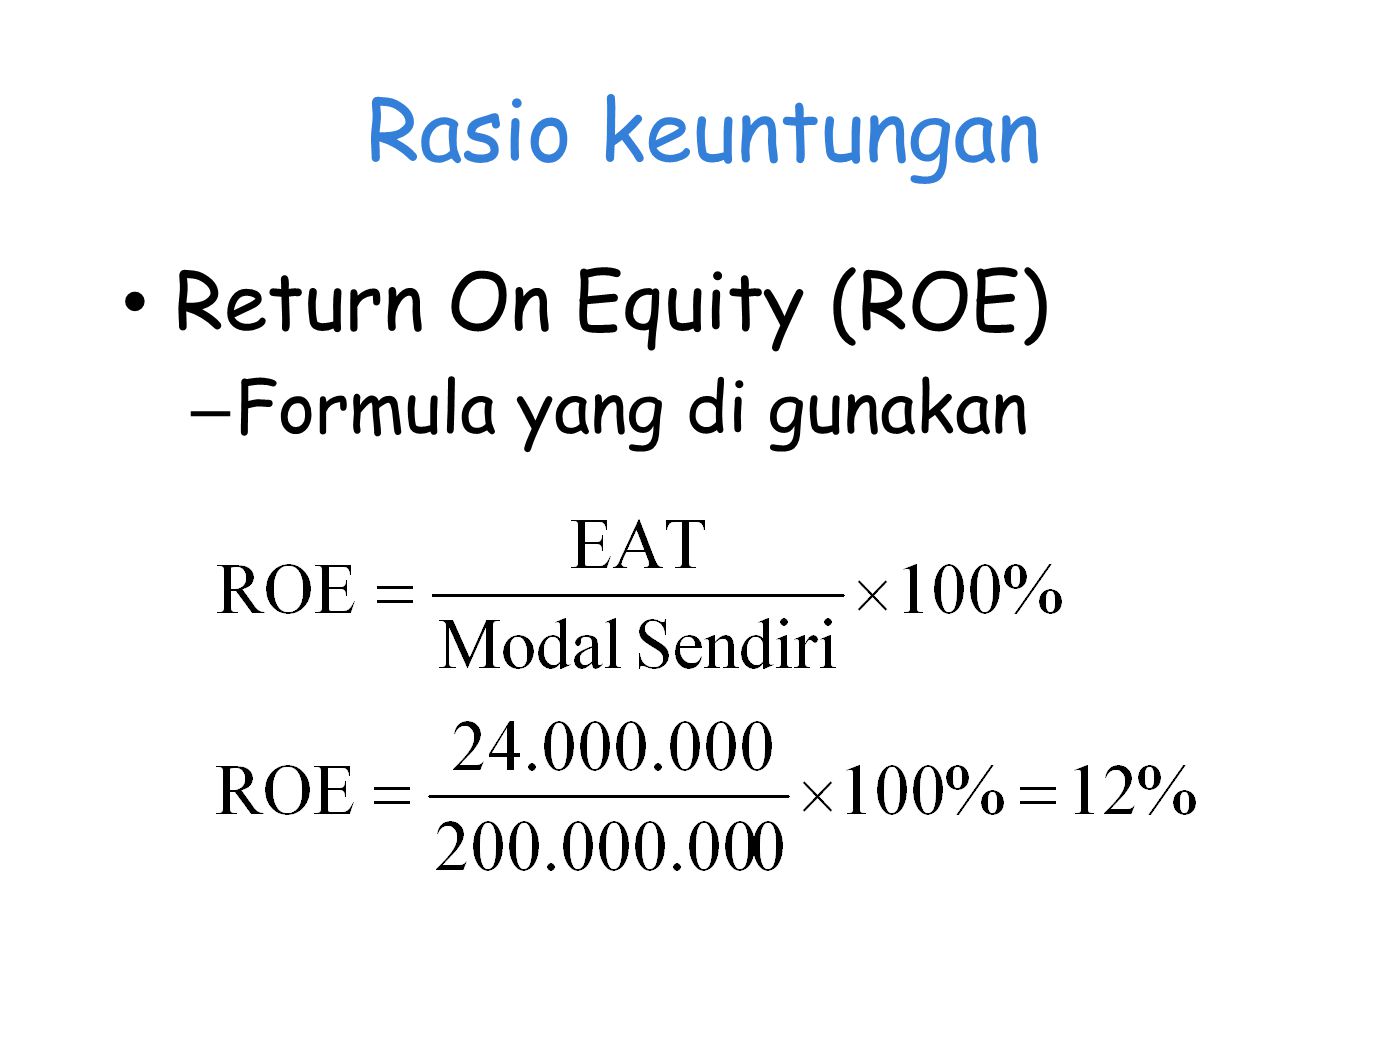 Rasio keuntungan Return On Equity (ROE) Formula yang di gunakan